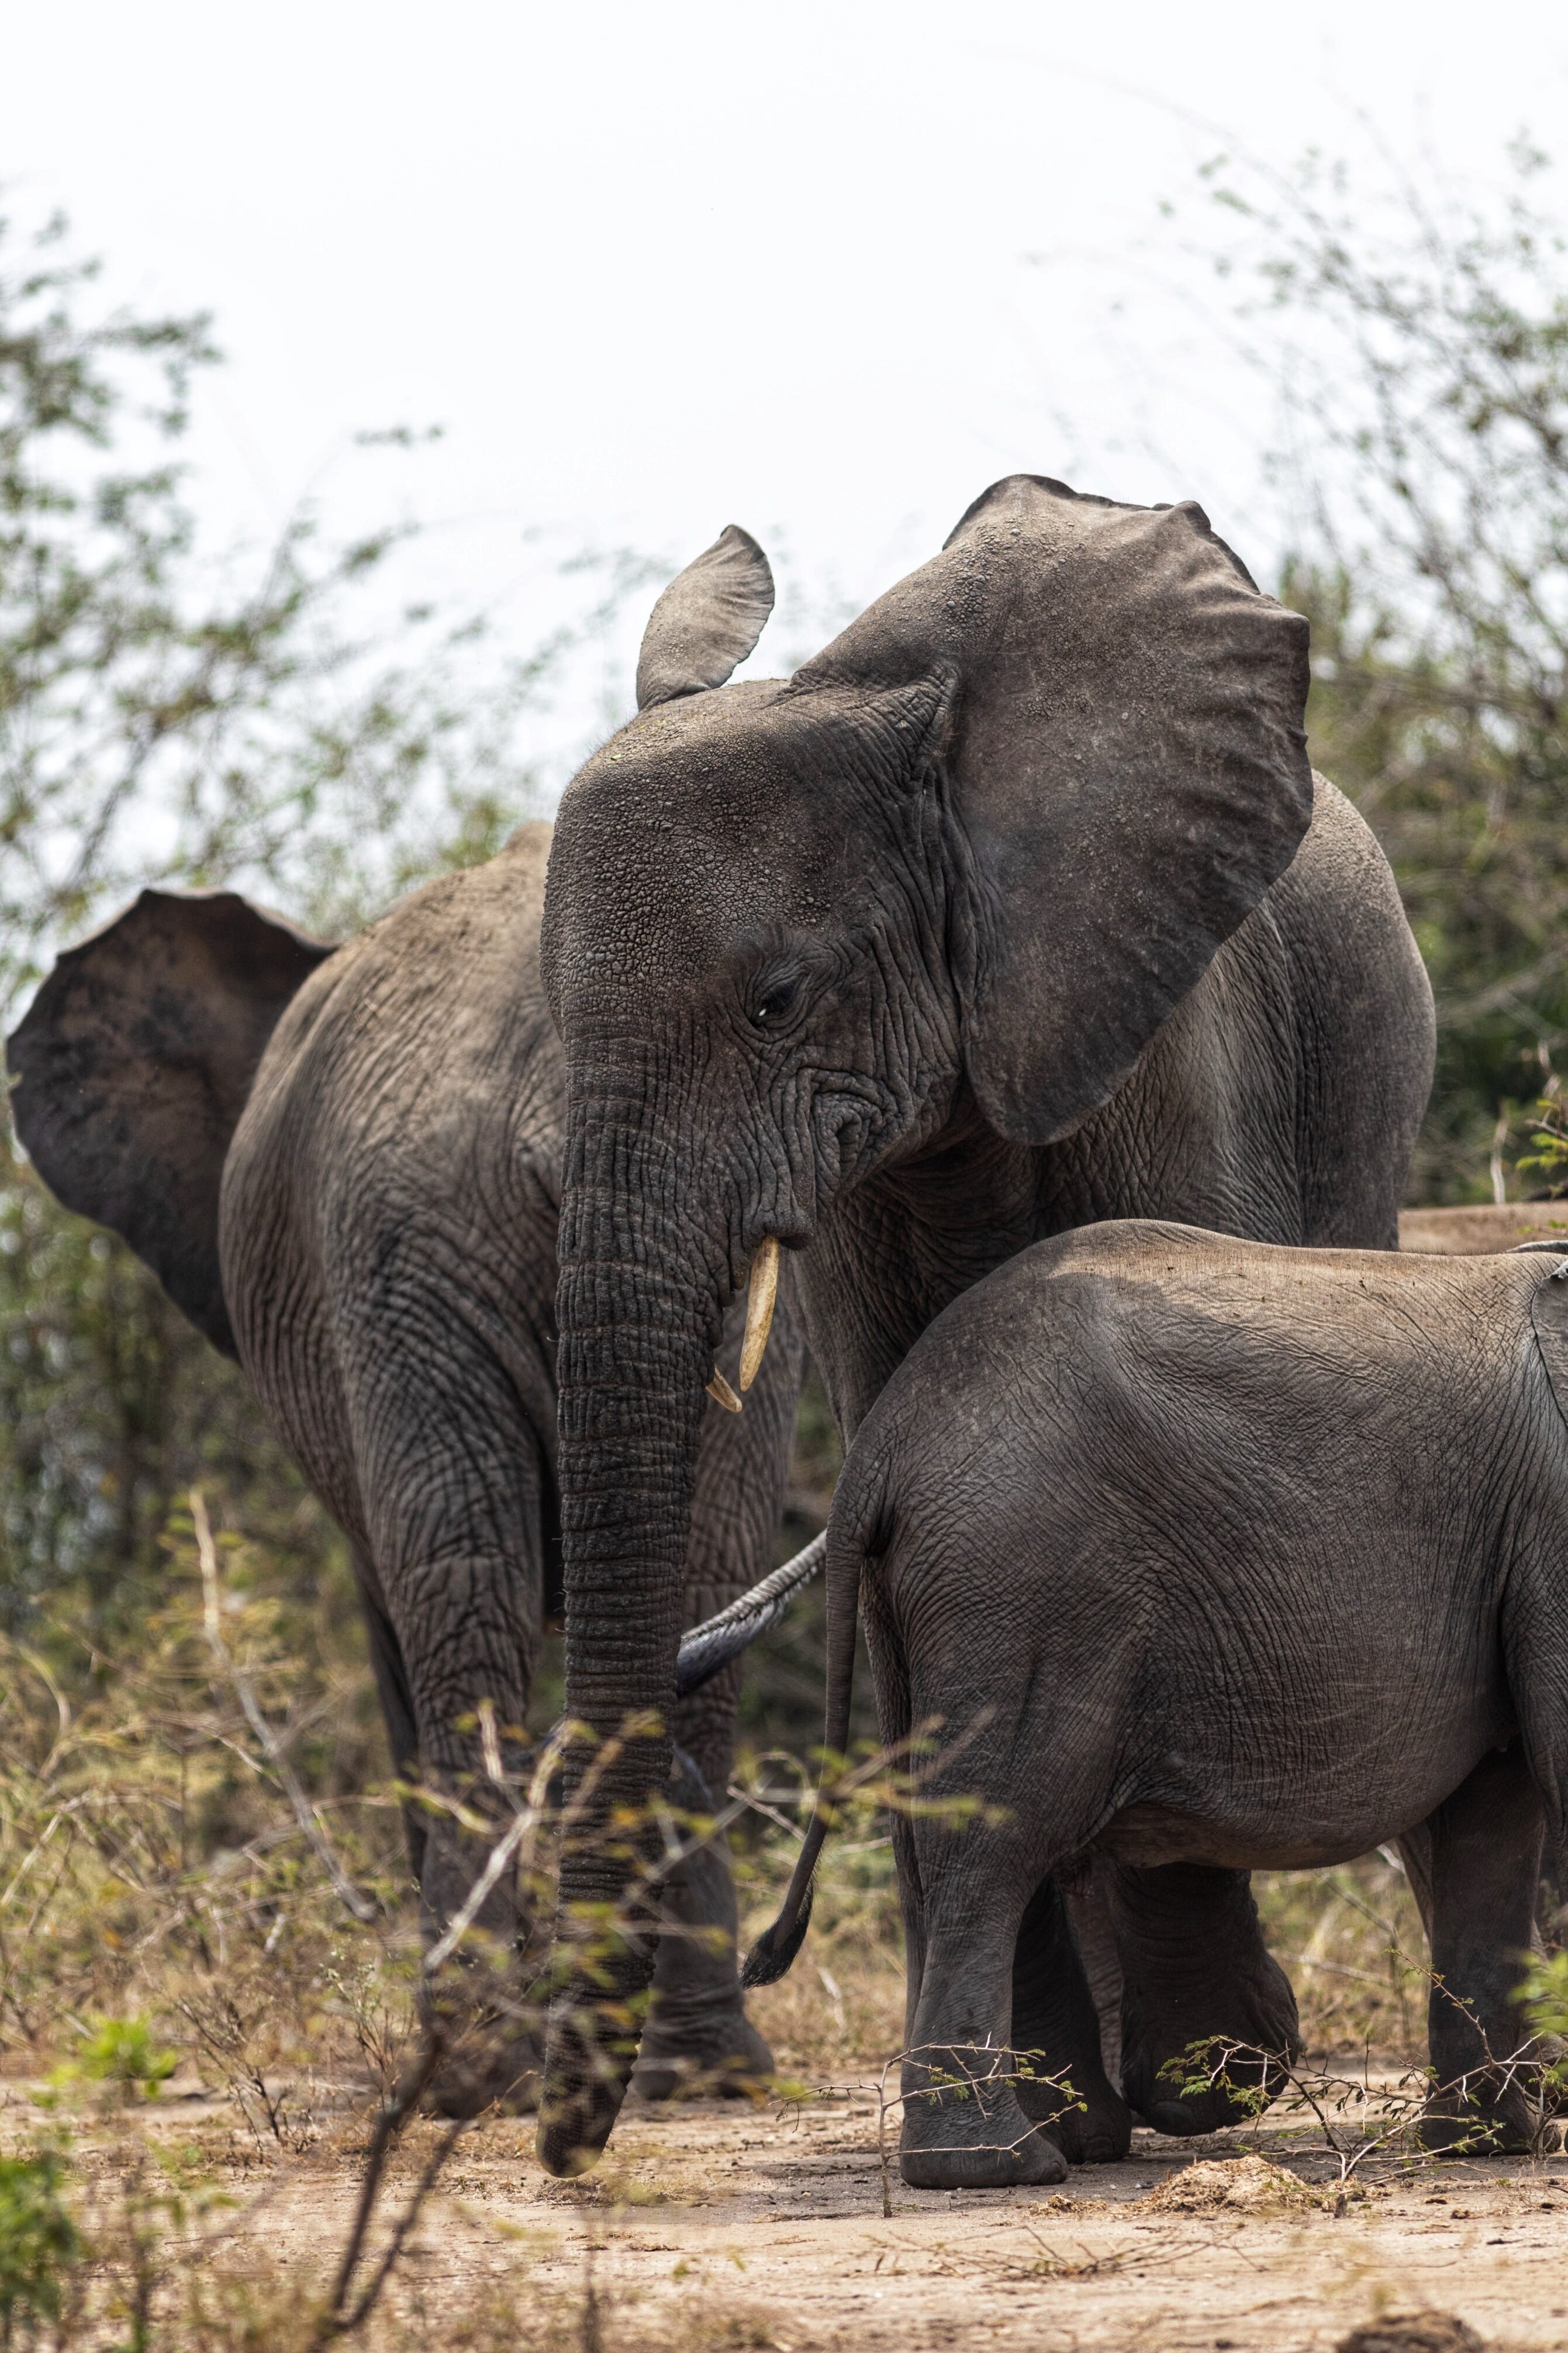 Uganda Safari Animals: What to Expect